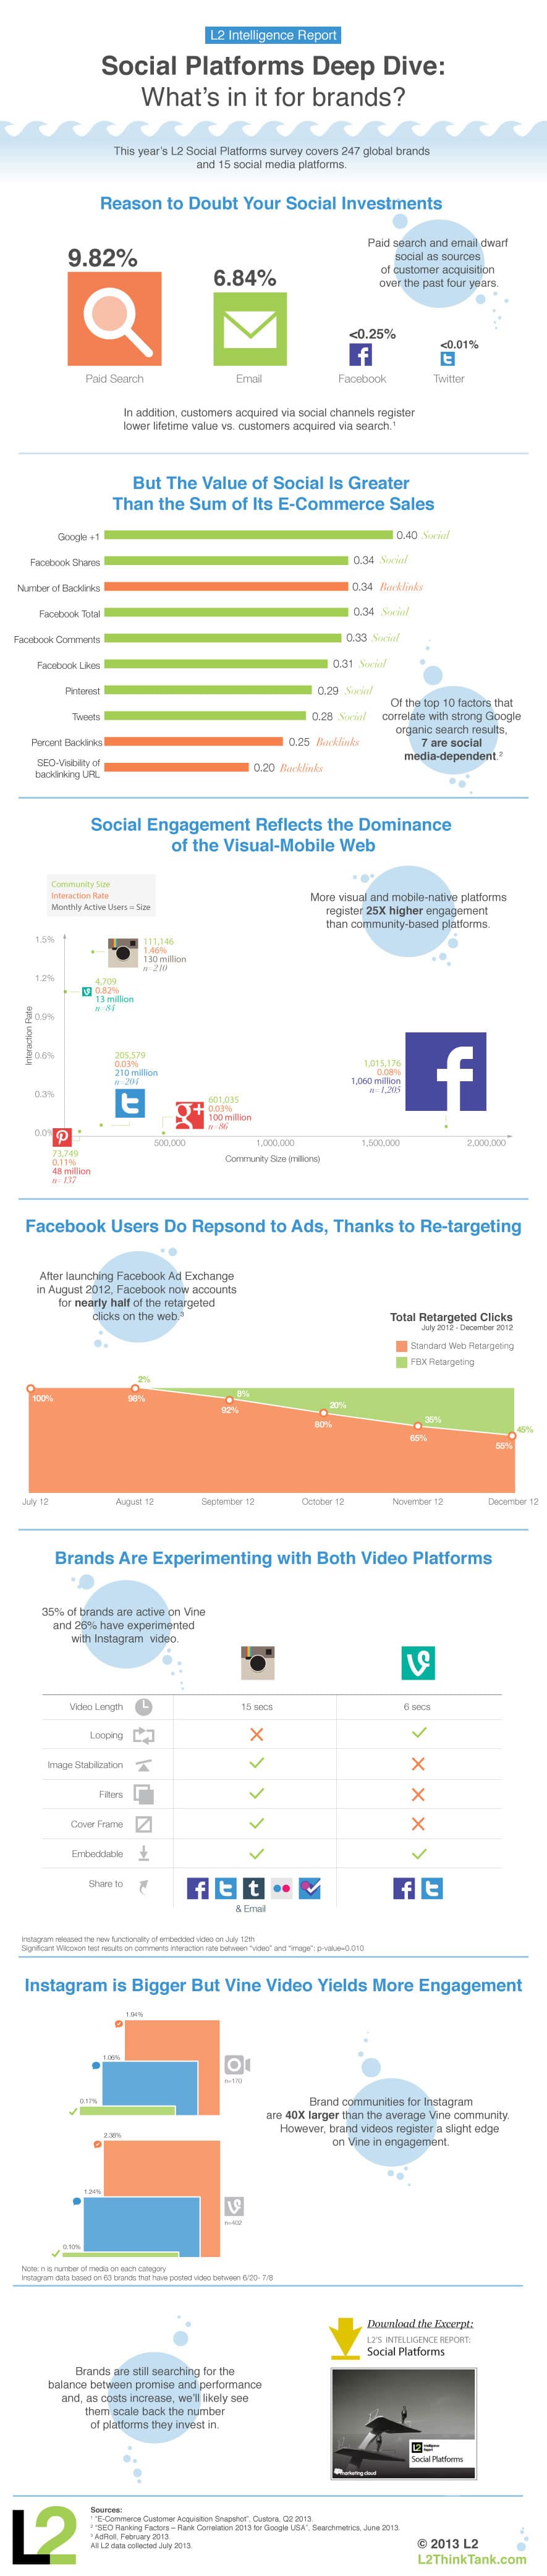 social-media-for-brands-infographic